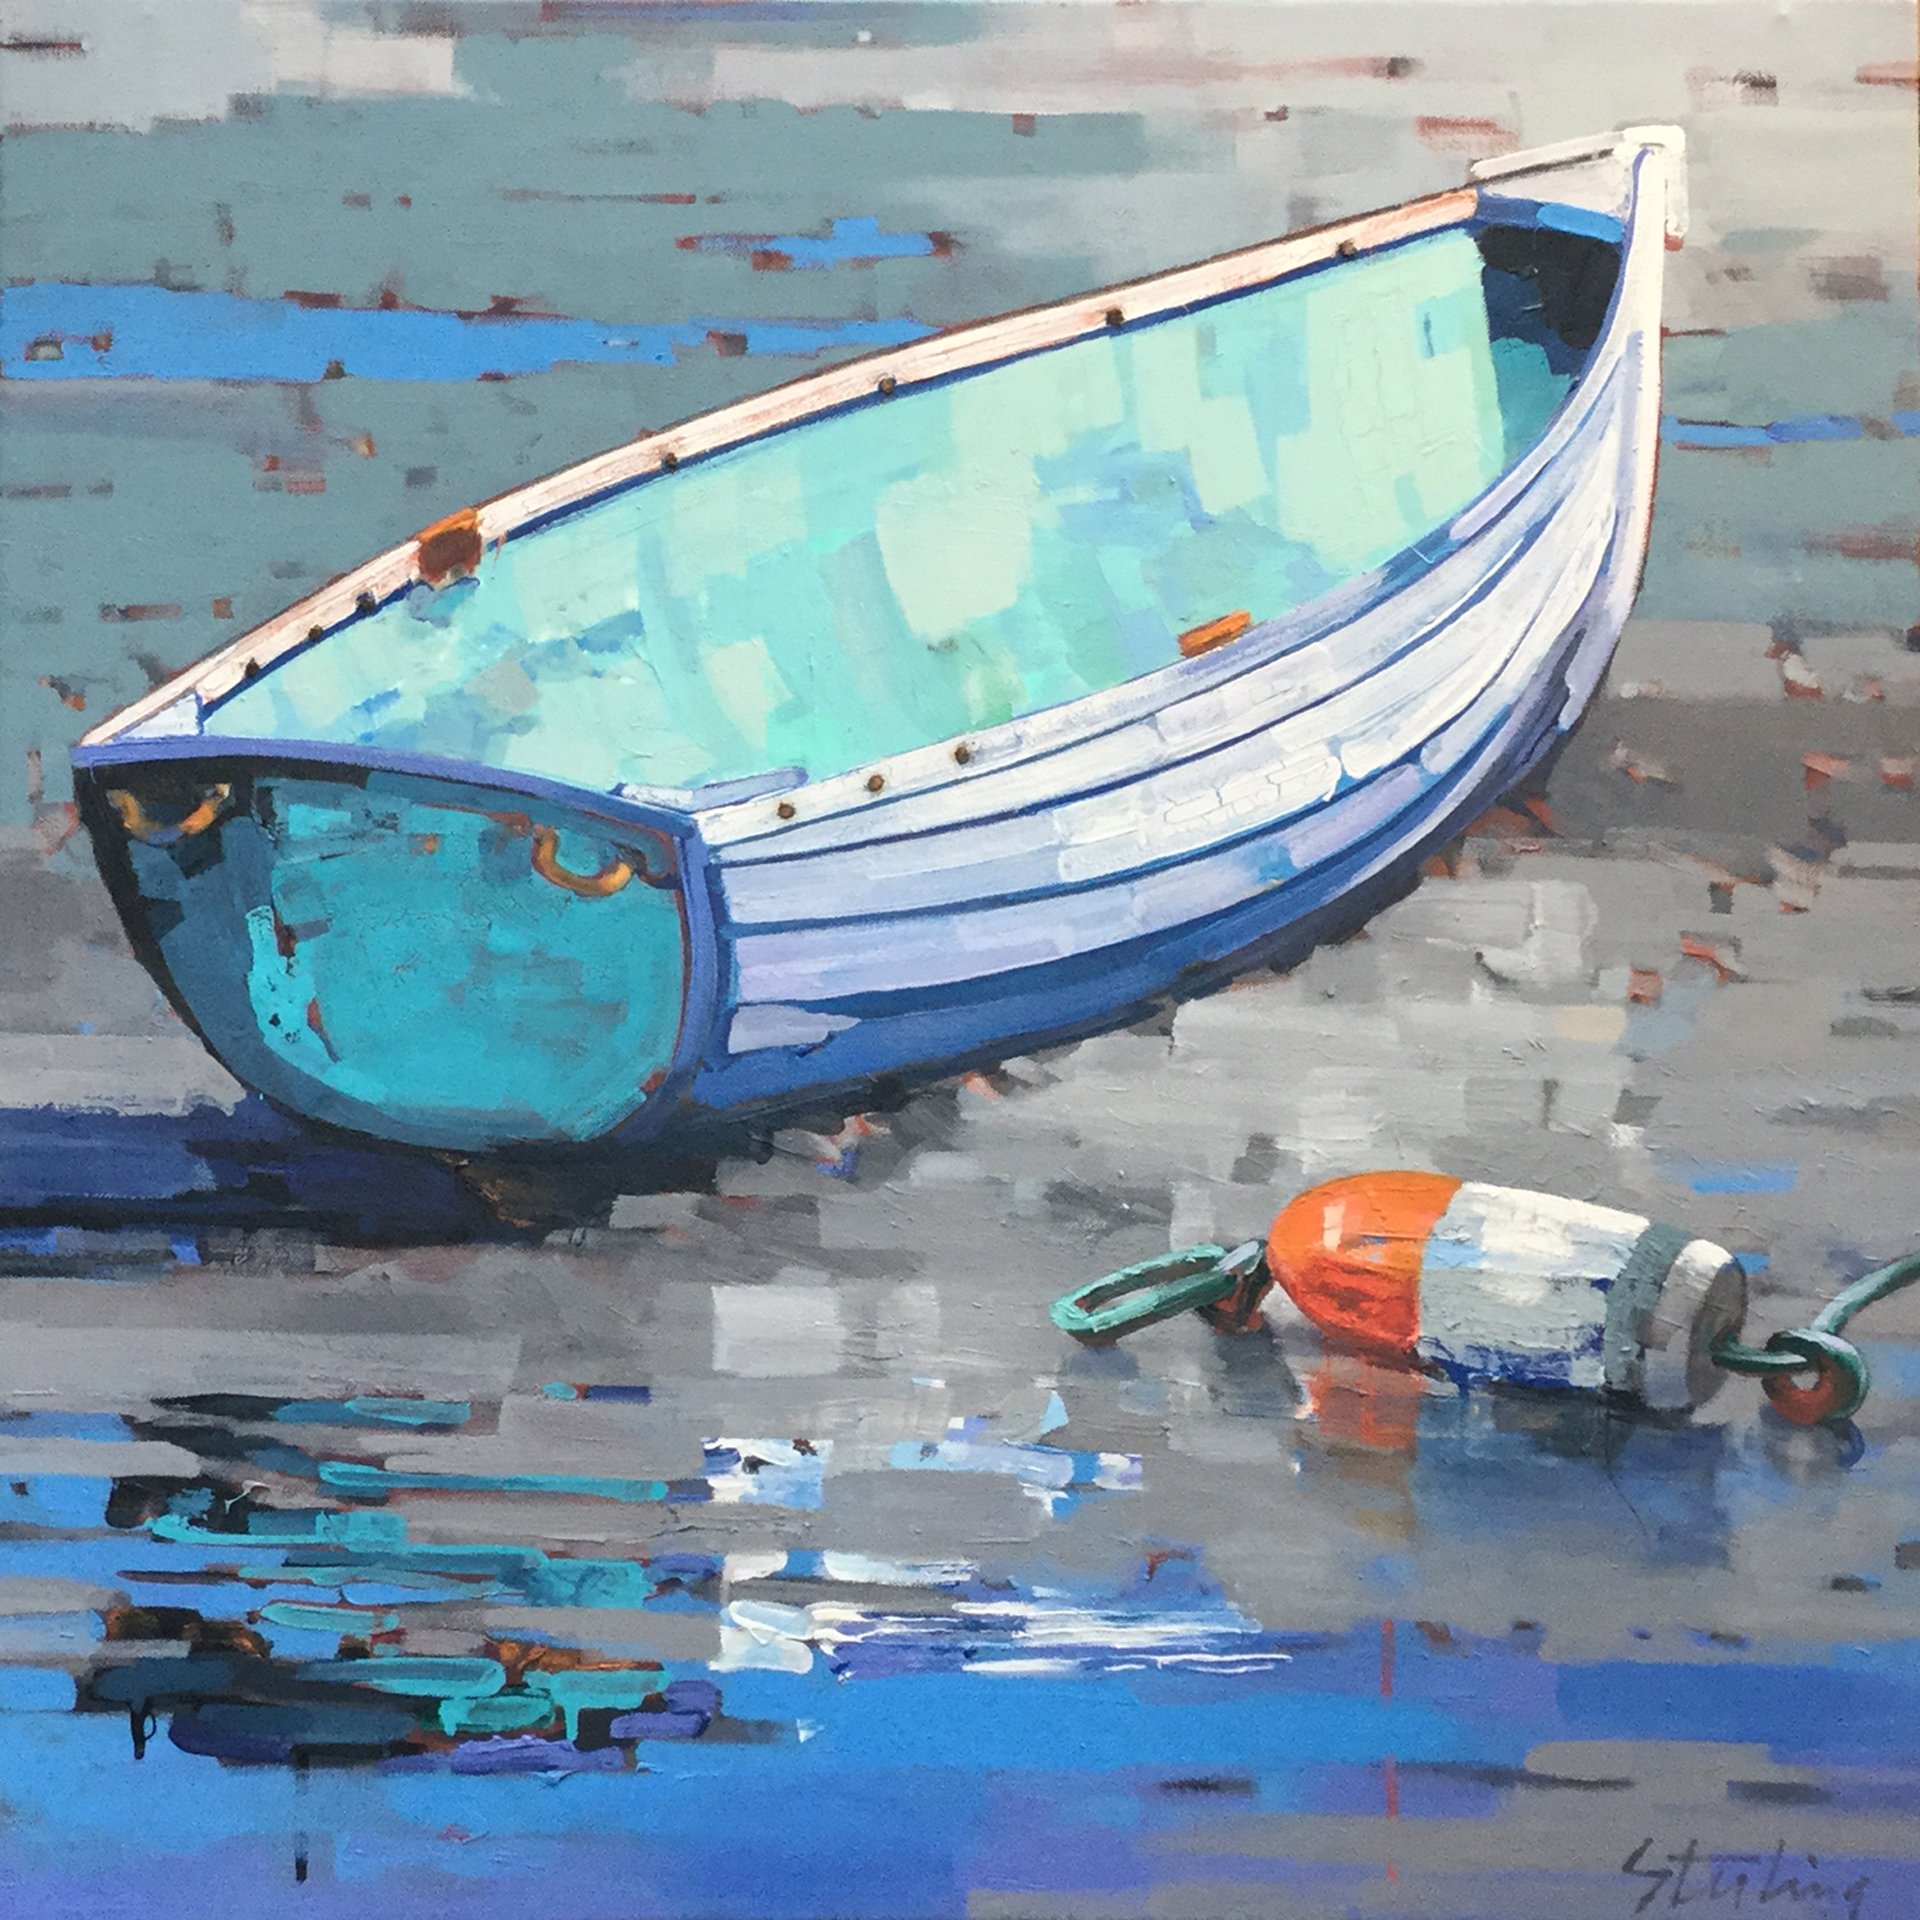 Tide Pool Reflection
acrylic on canvas
30x30